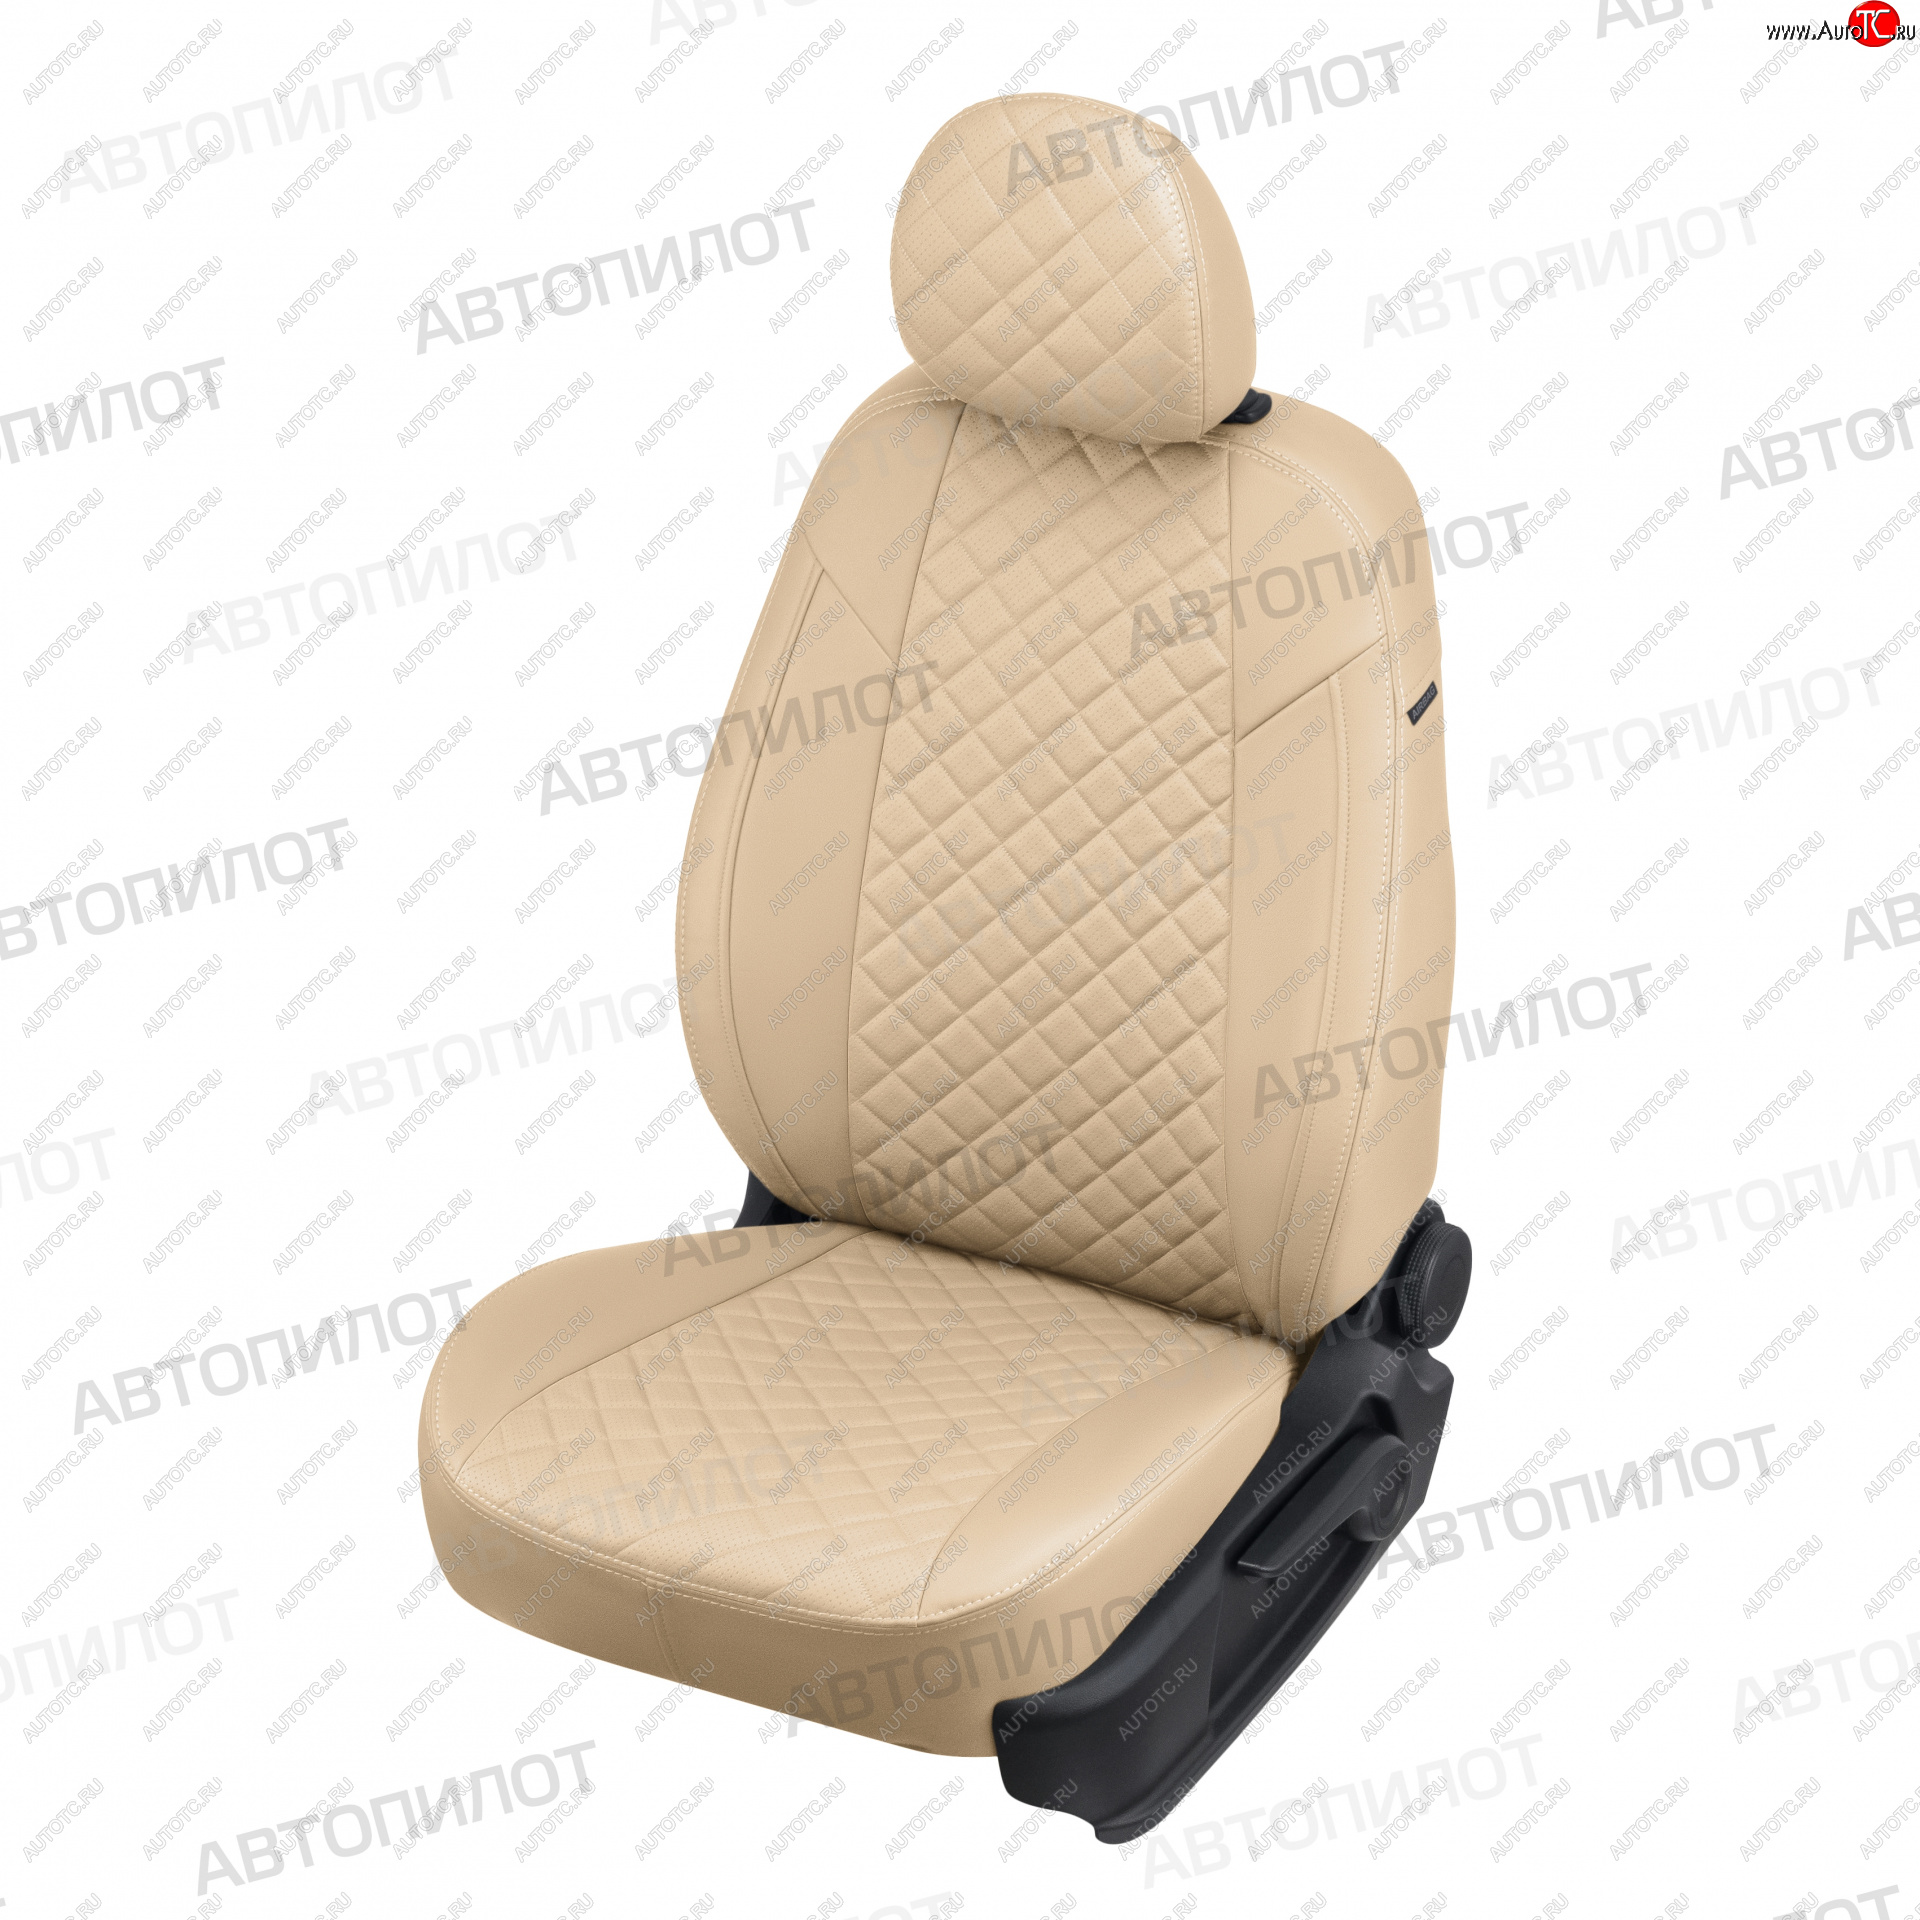 14 499 р. Чехлы сидений (5 мест, экокожа) Автопилот Ромб  Ford Galaxy  WGR (1995-2006) (бежевый)